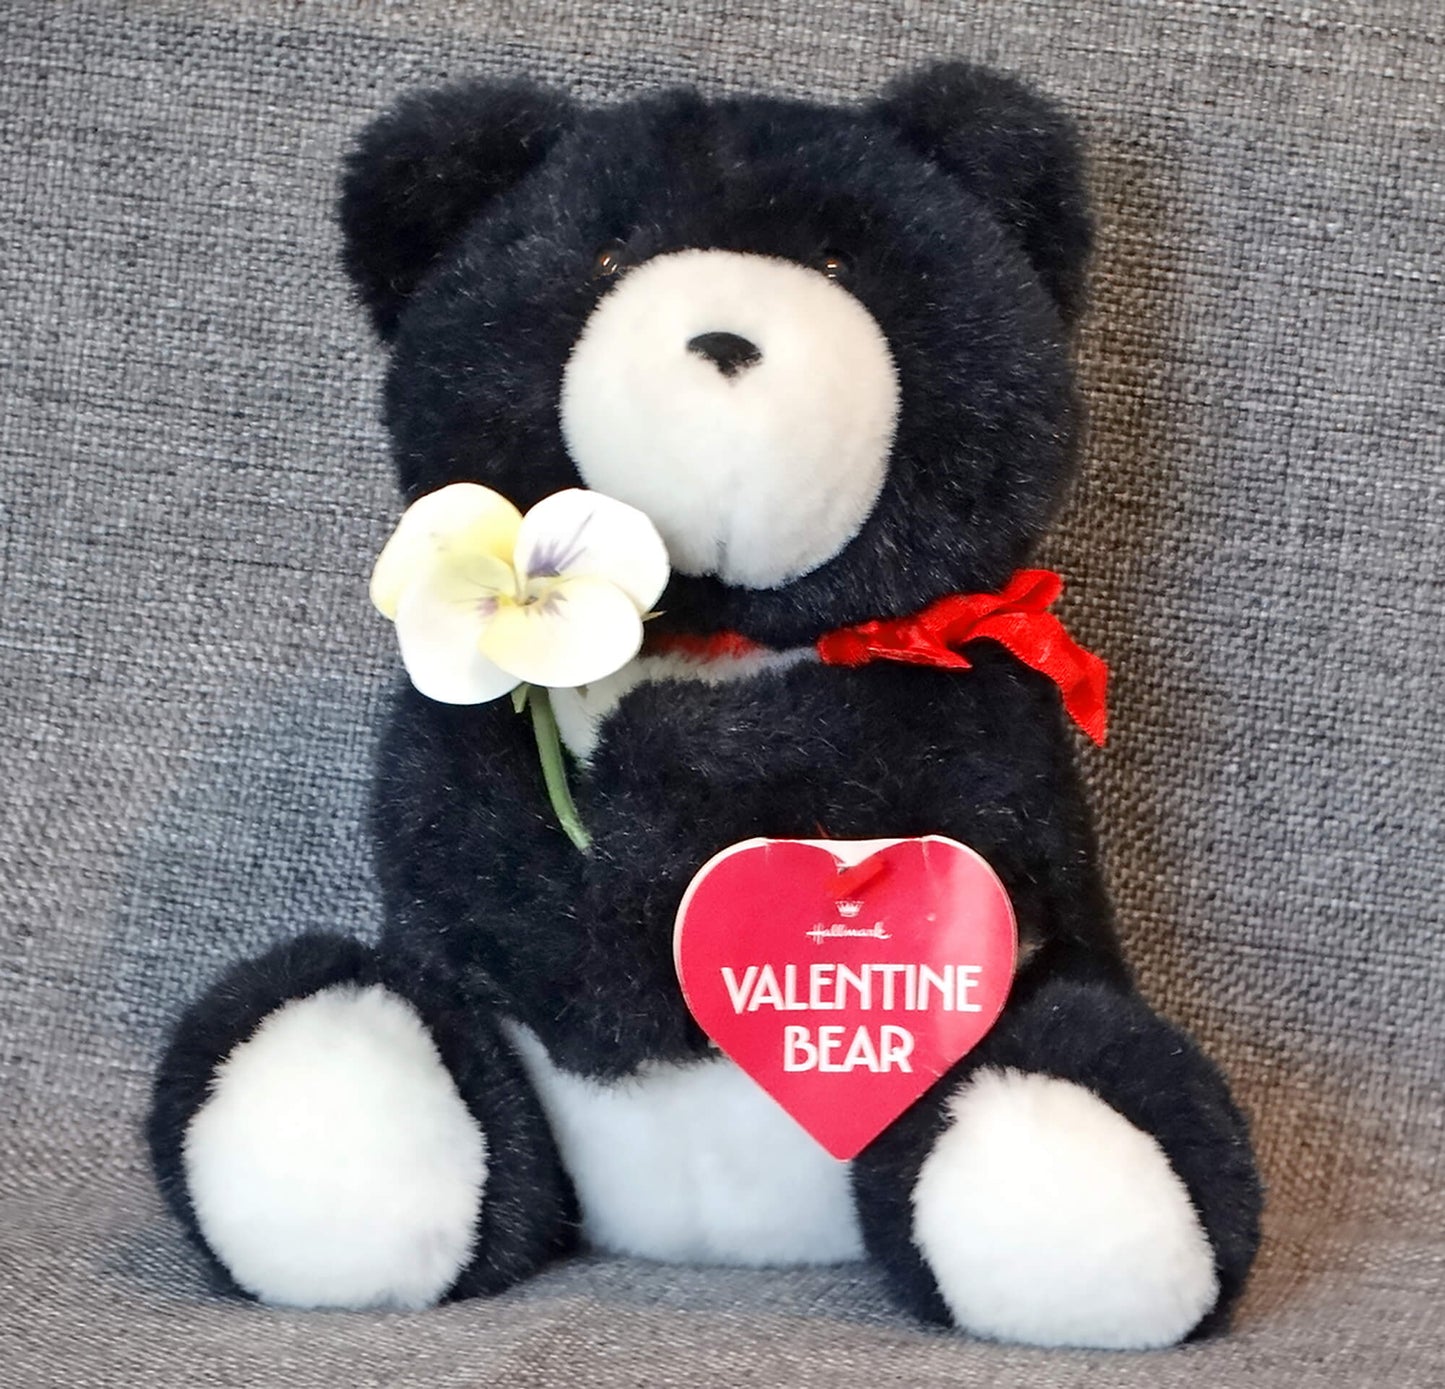 hallmark-valentines-day-plush-stuffed-panda-bear-china-flower-5.jpg